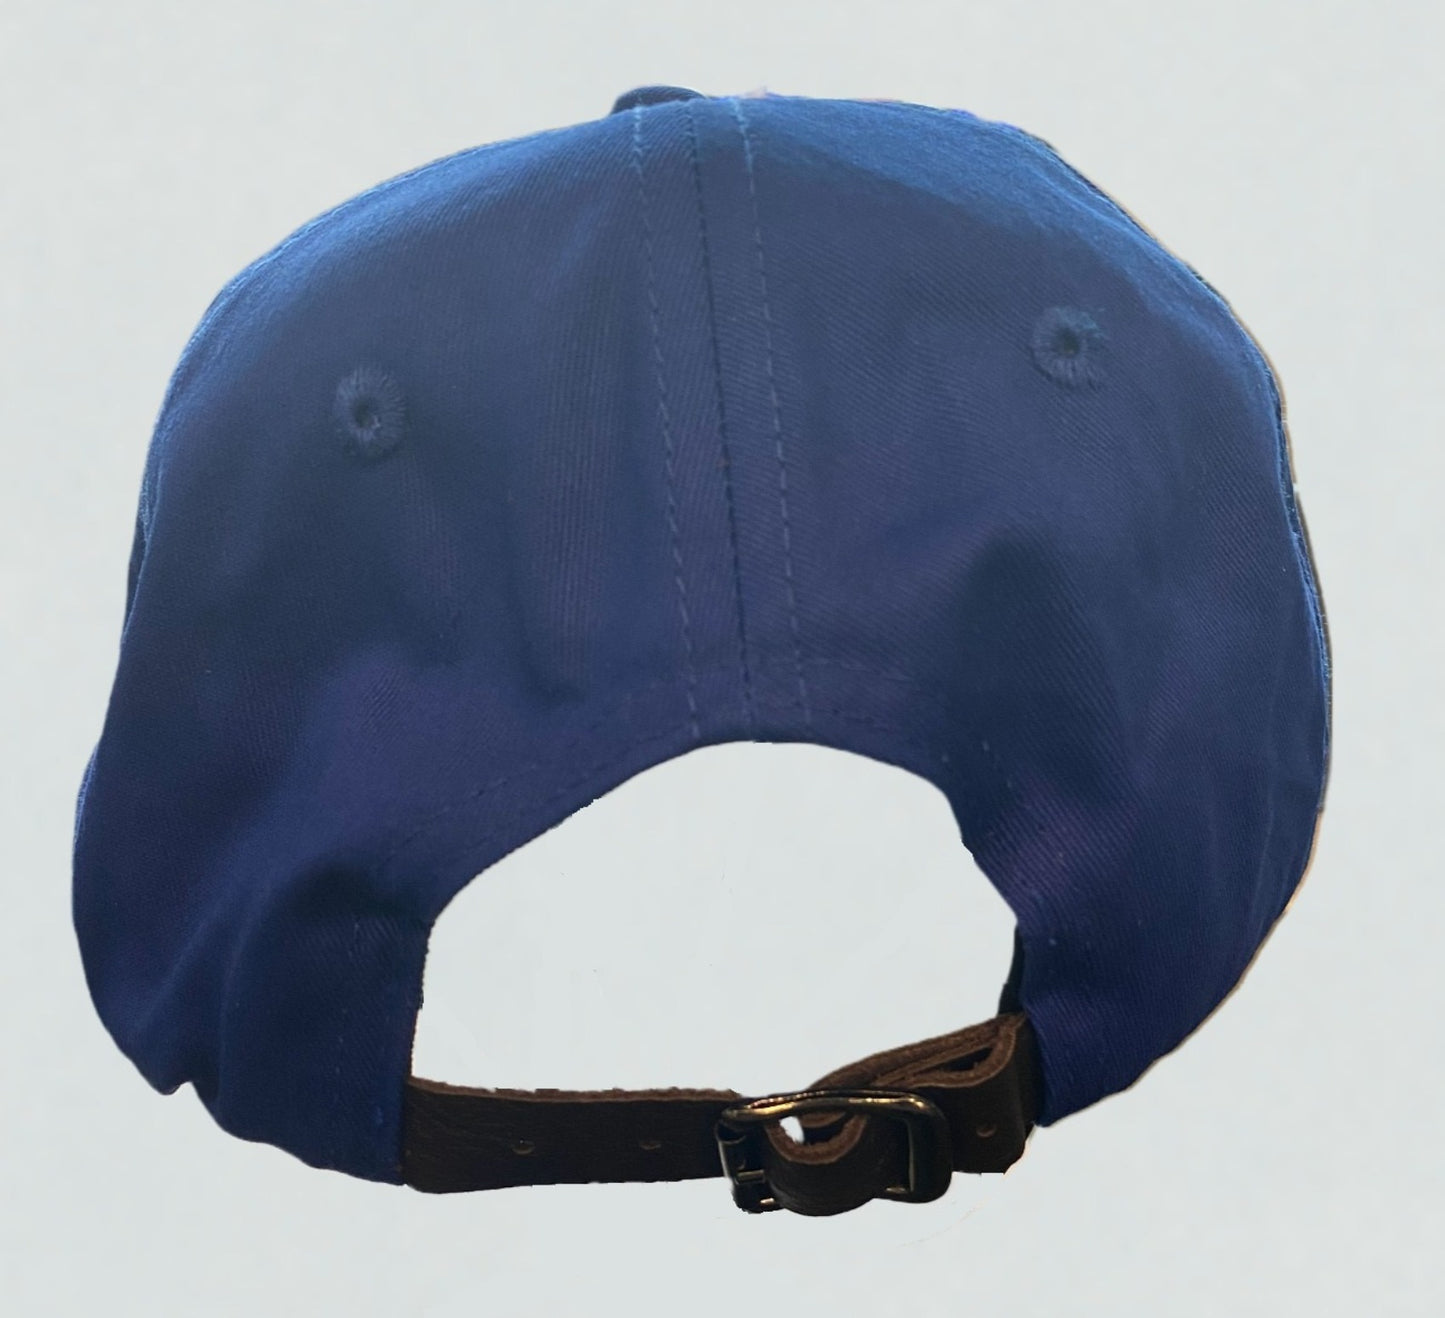 Blue Bear Player Polo Baseball Cap